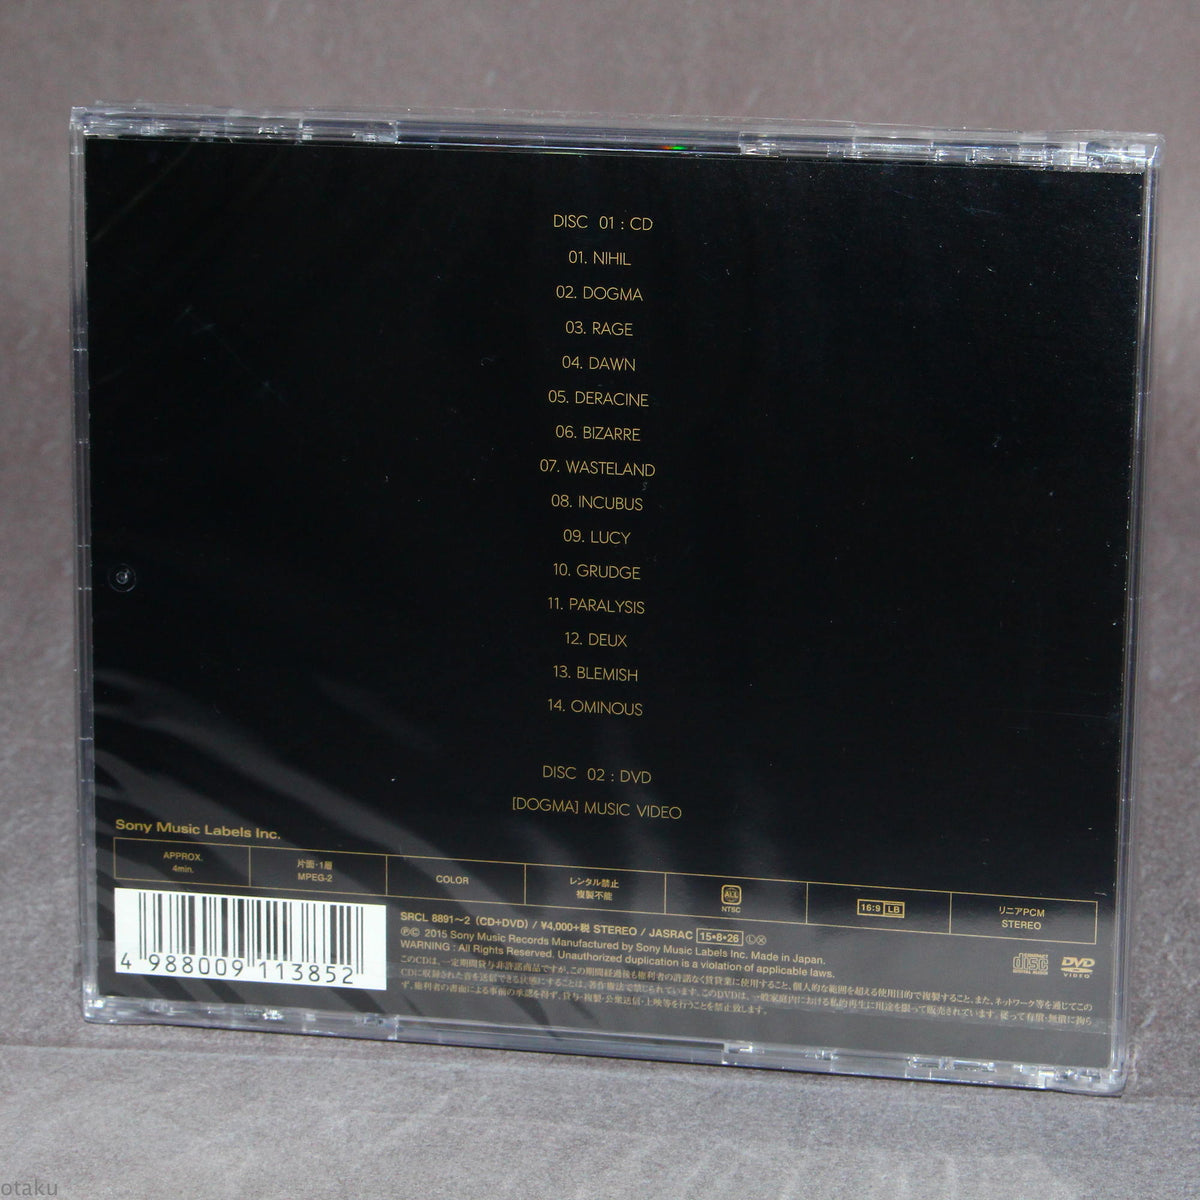 The Gazette - DOGMA - Limited Edition with DVD – Otaku.co.uk